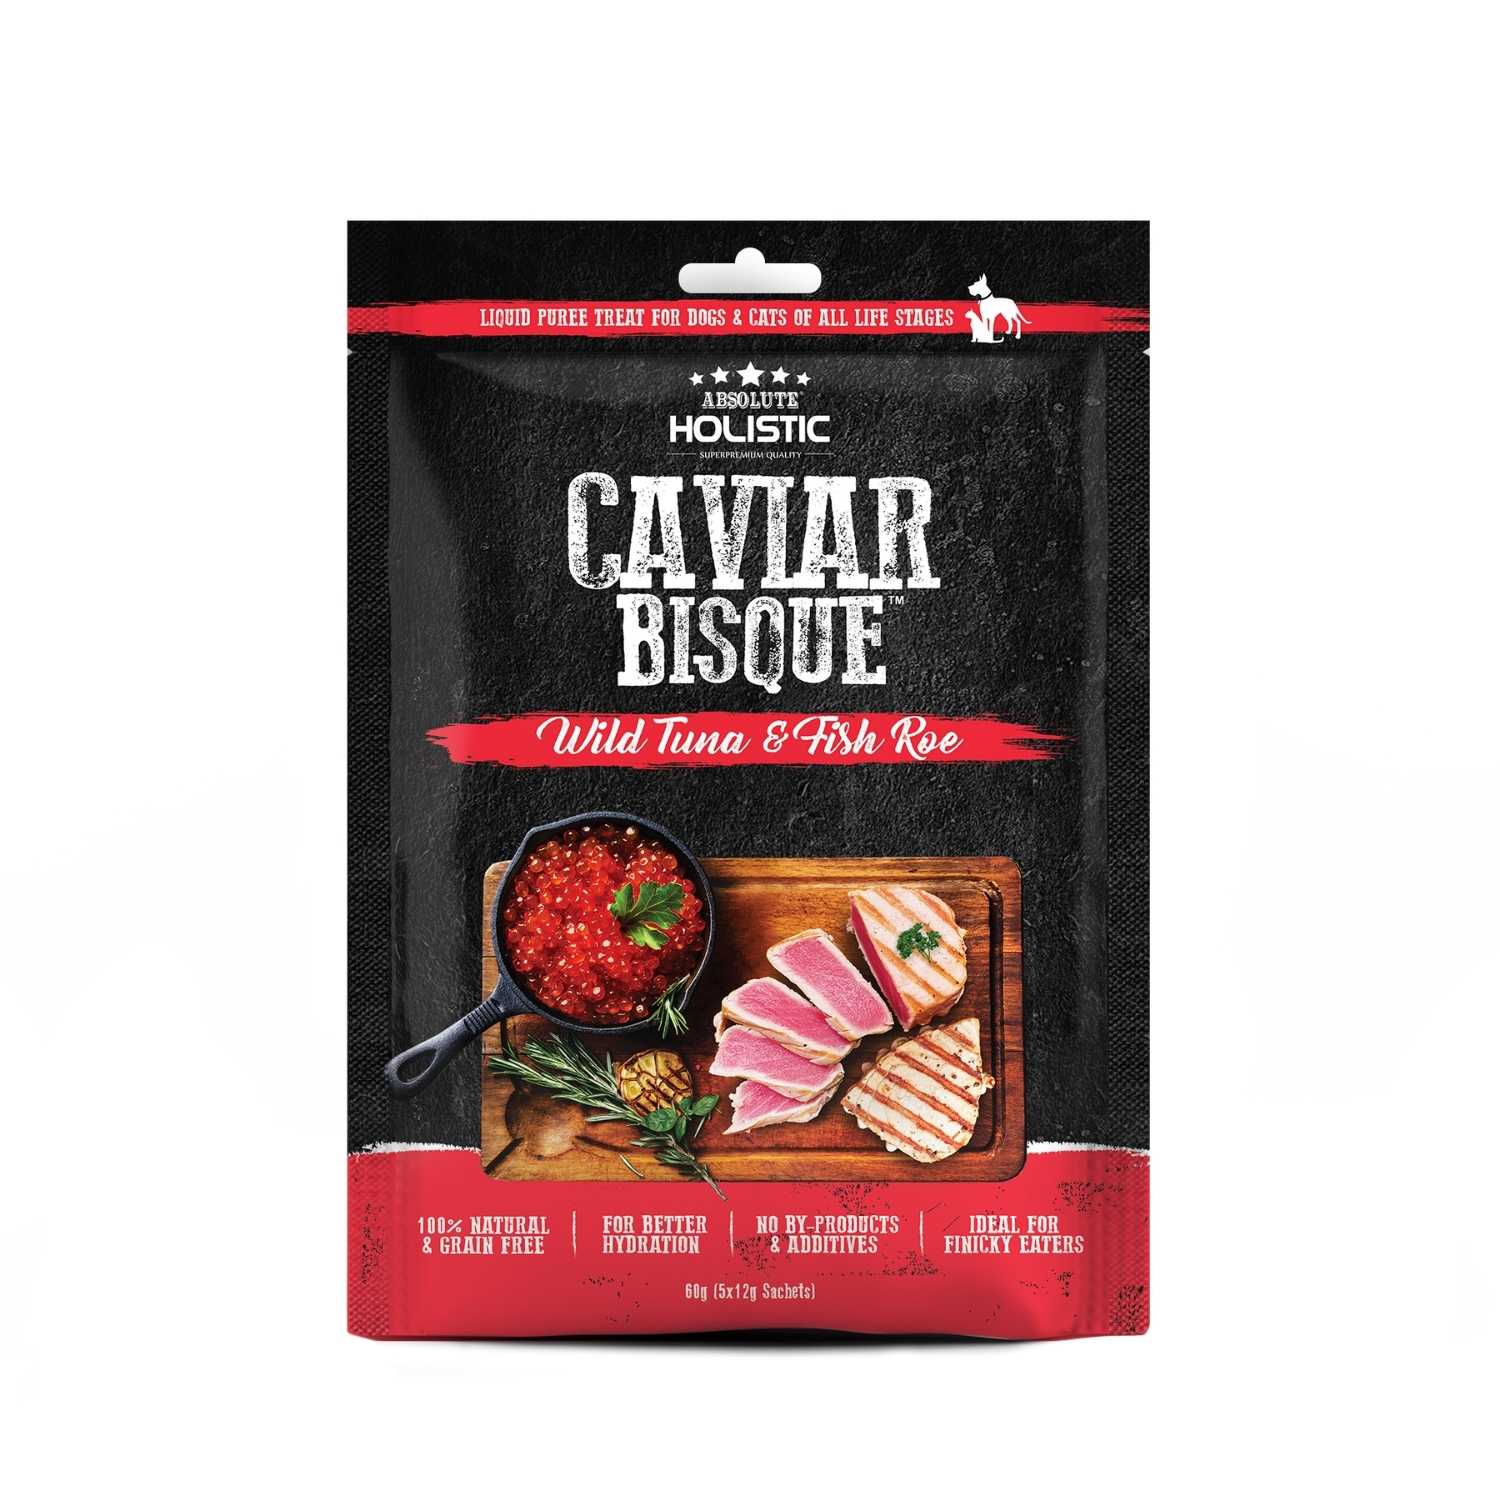 Absolute Holistic - Caviar Bisque (wild tuna & fish roe) - Dog & Cat 5x12g Treats